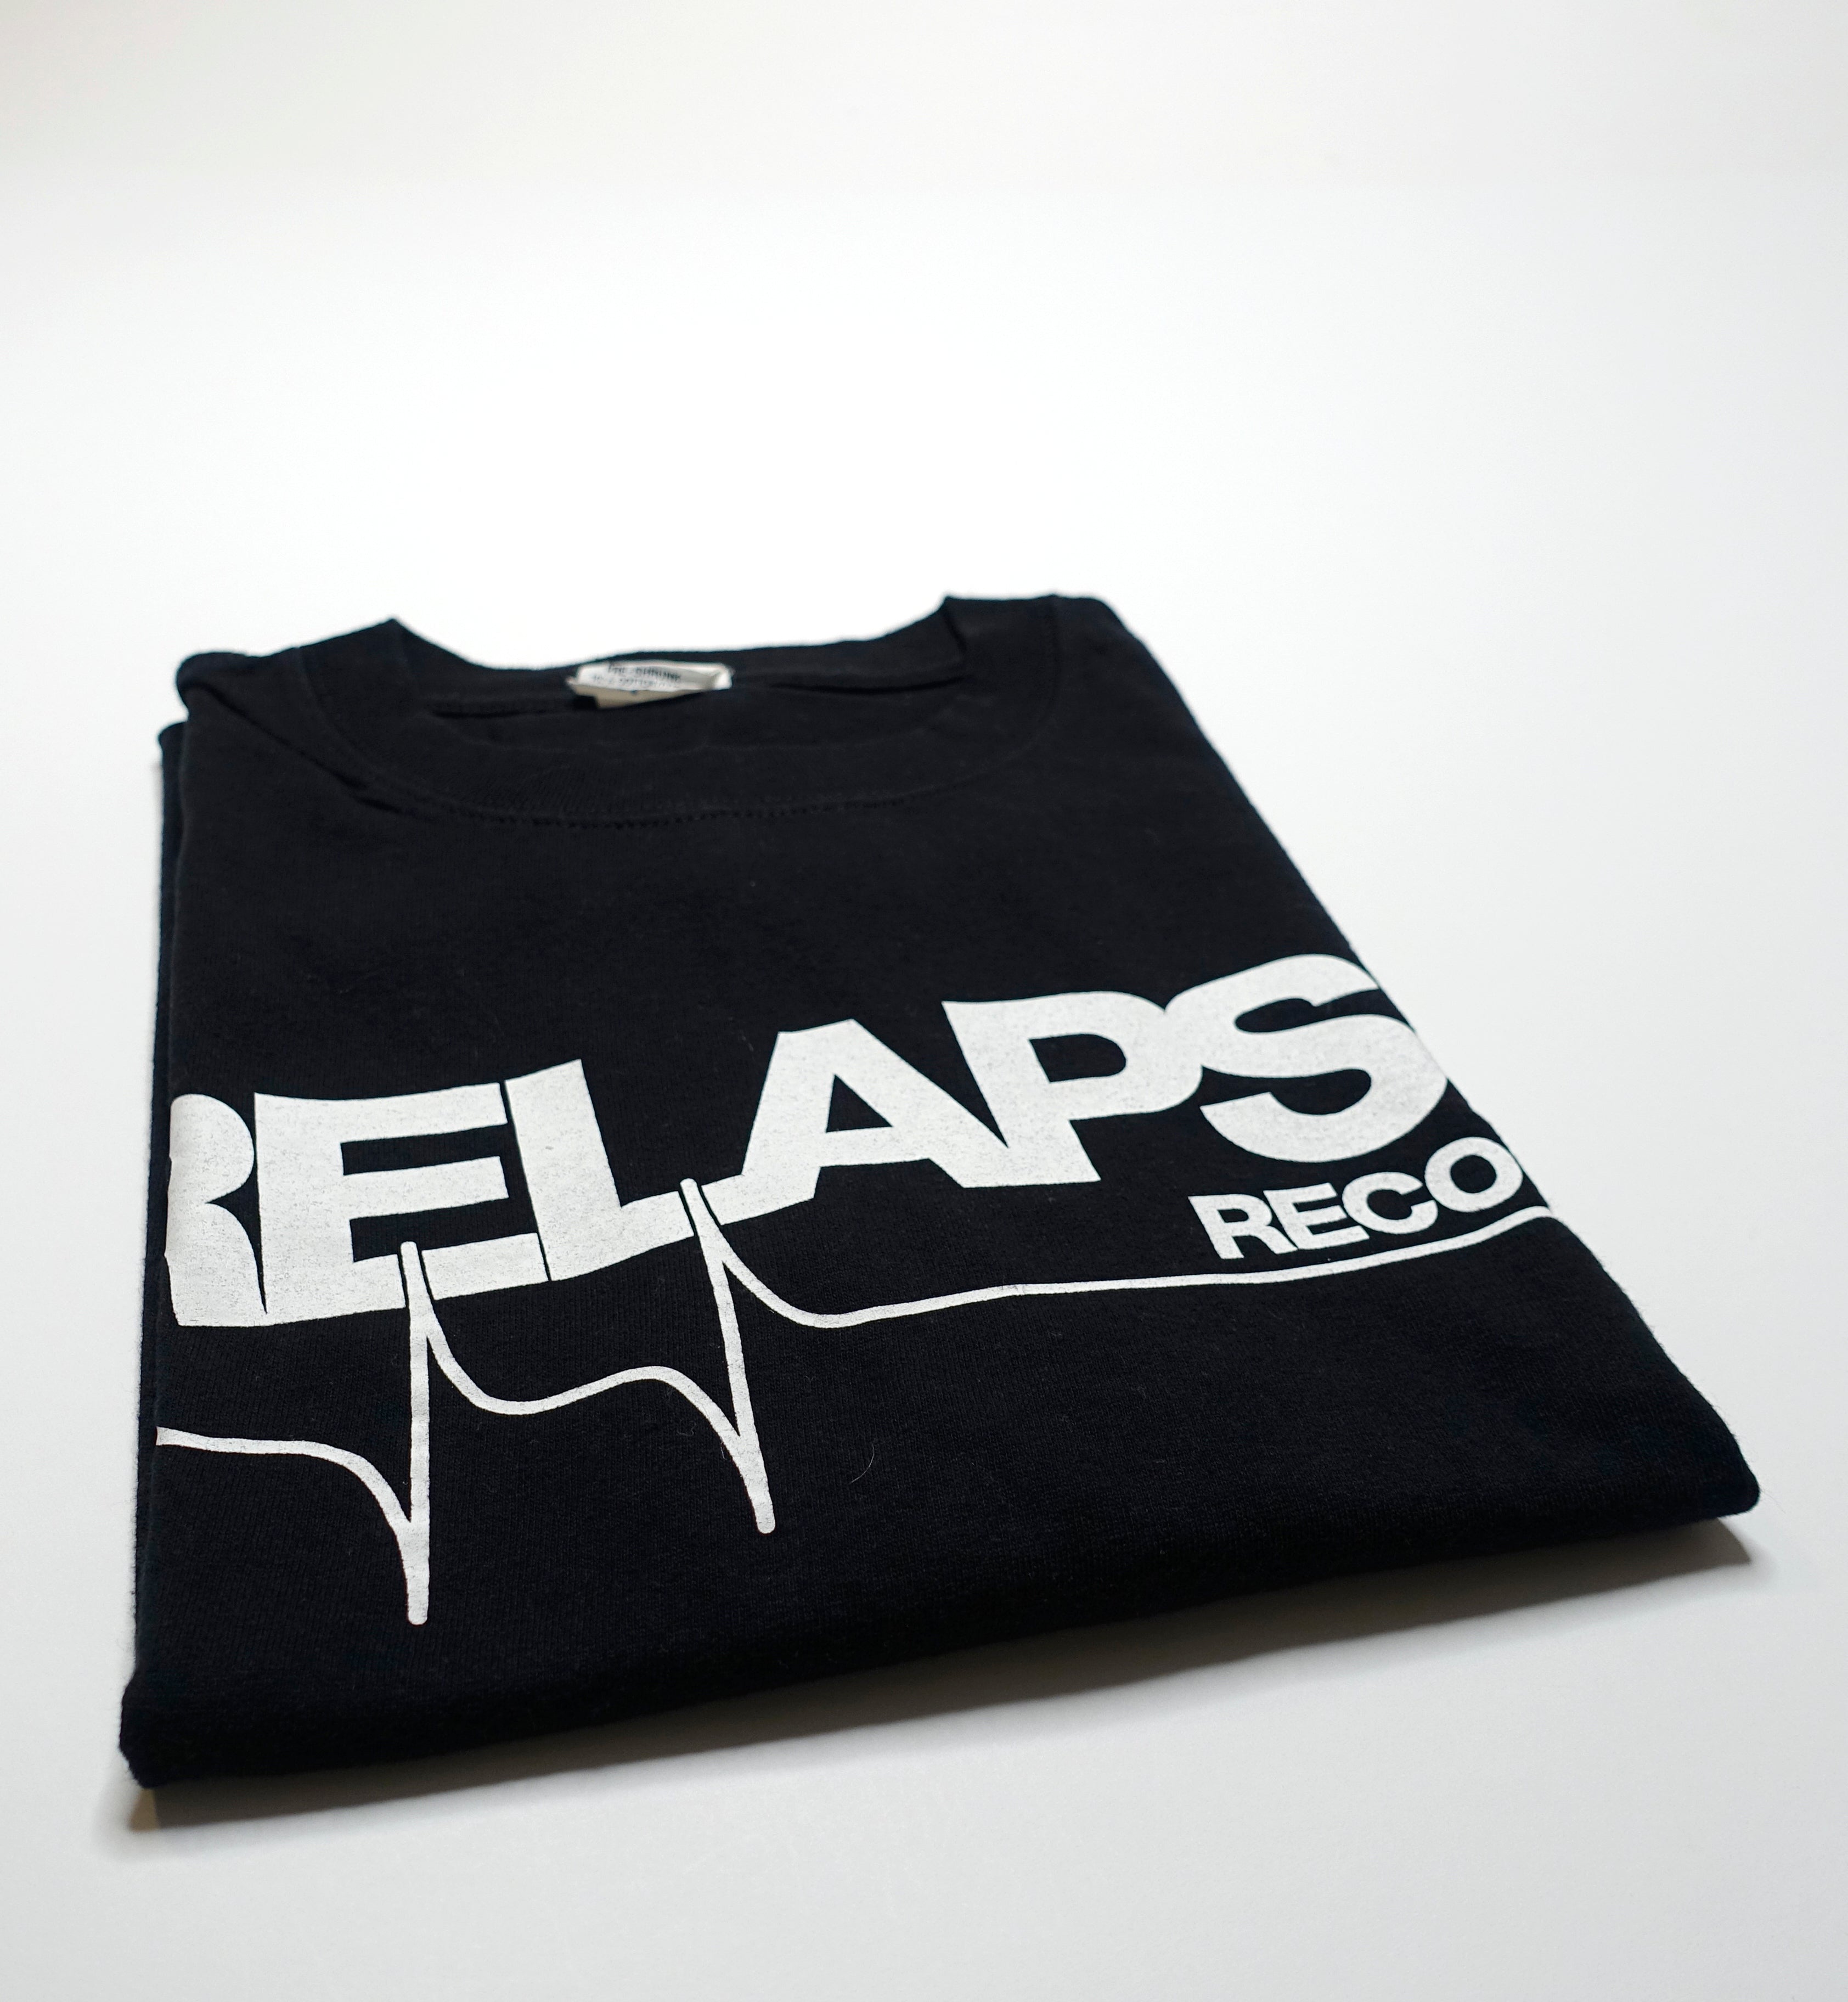 Relapse Records - Classic Logo Shirt Size Large